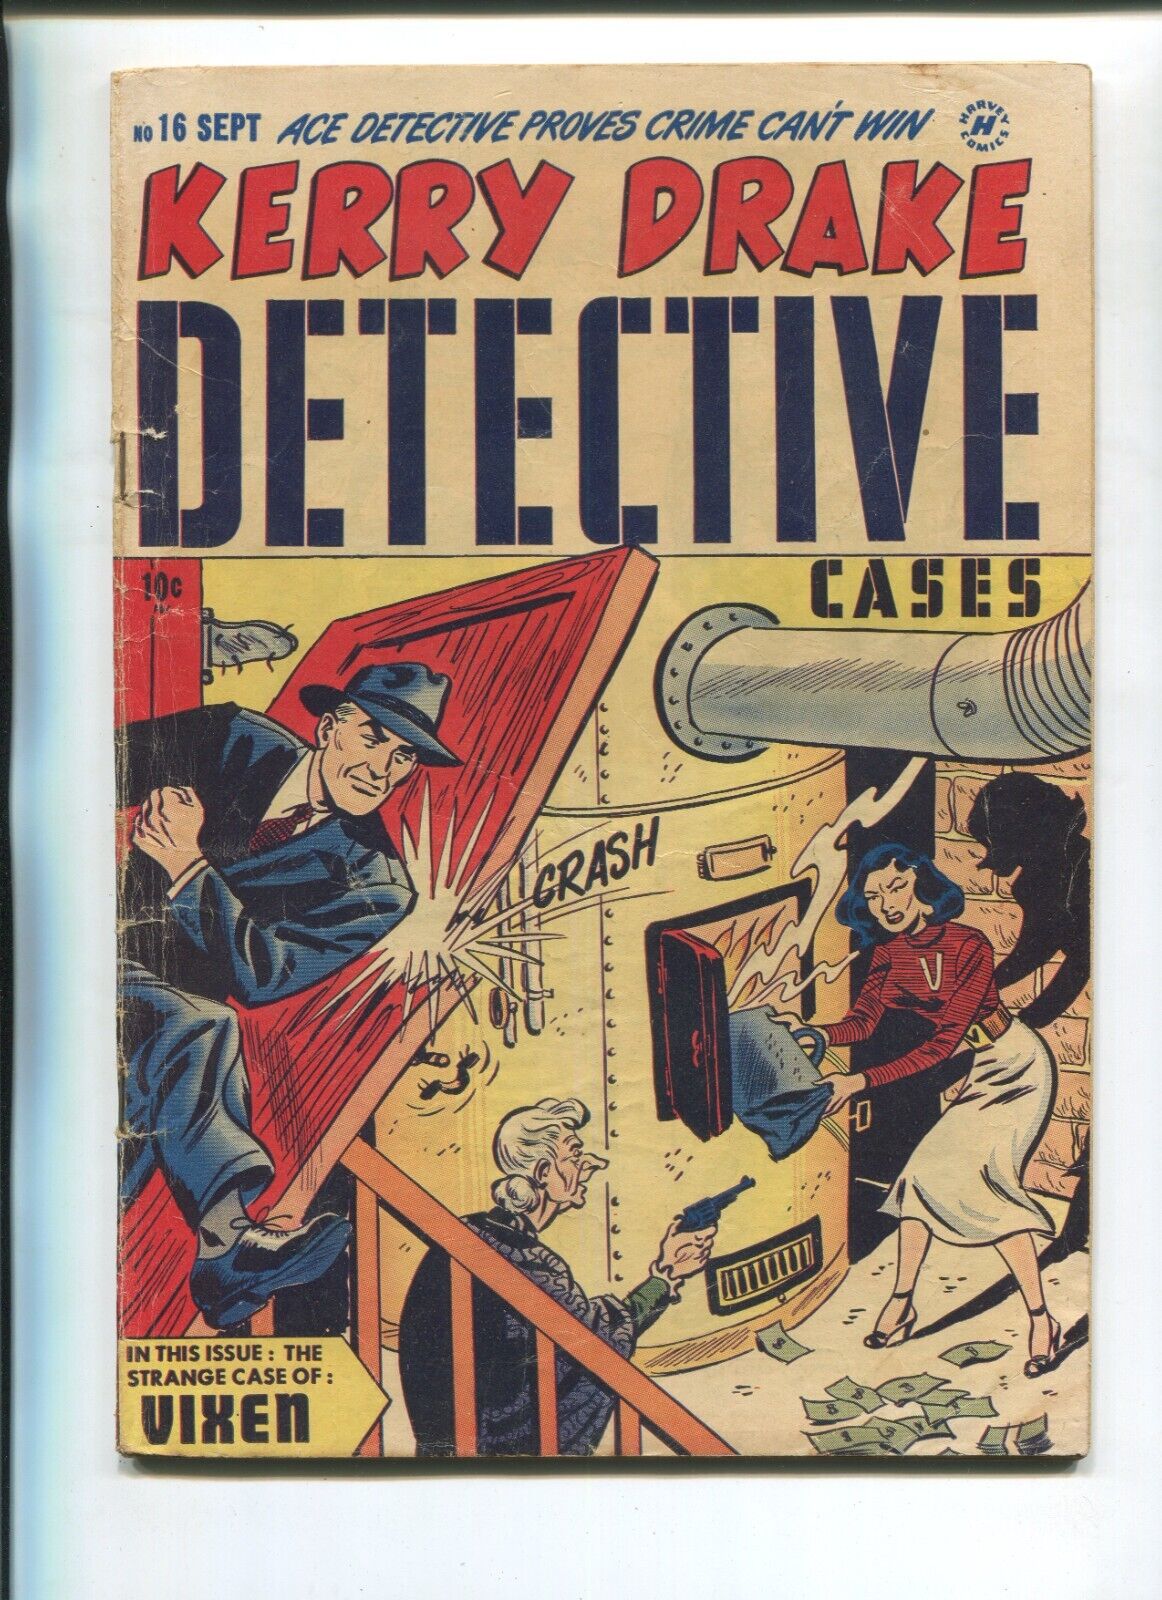 KERRY DRAKE DETECTIVE CASES 16 VG V1 HARVEY COMICS 1949 VIXEN NICE GOLDEN AGE